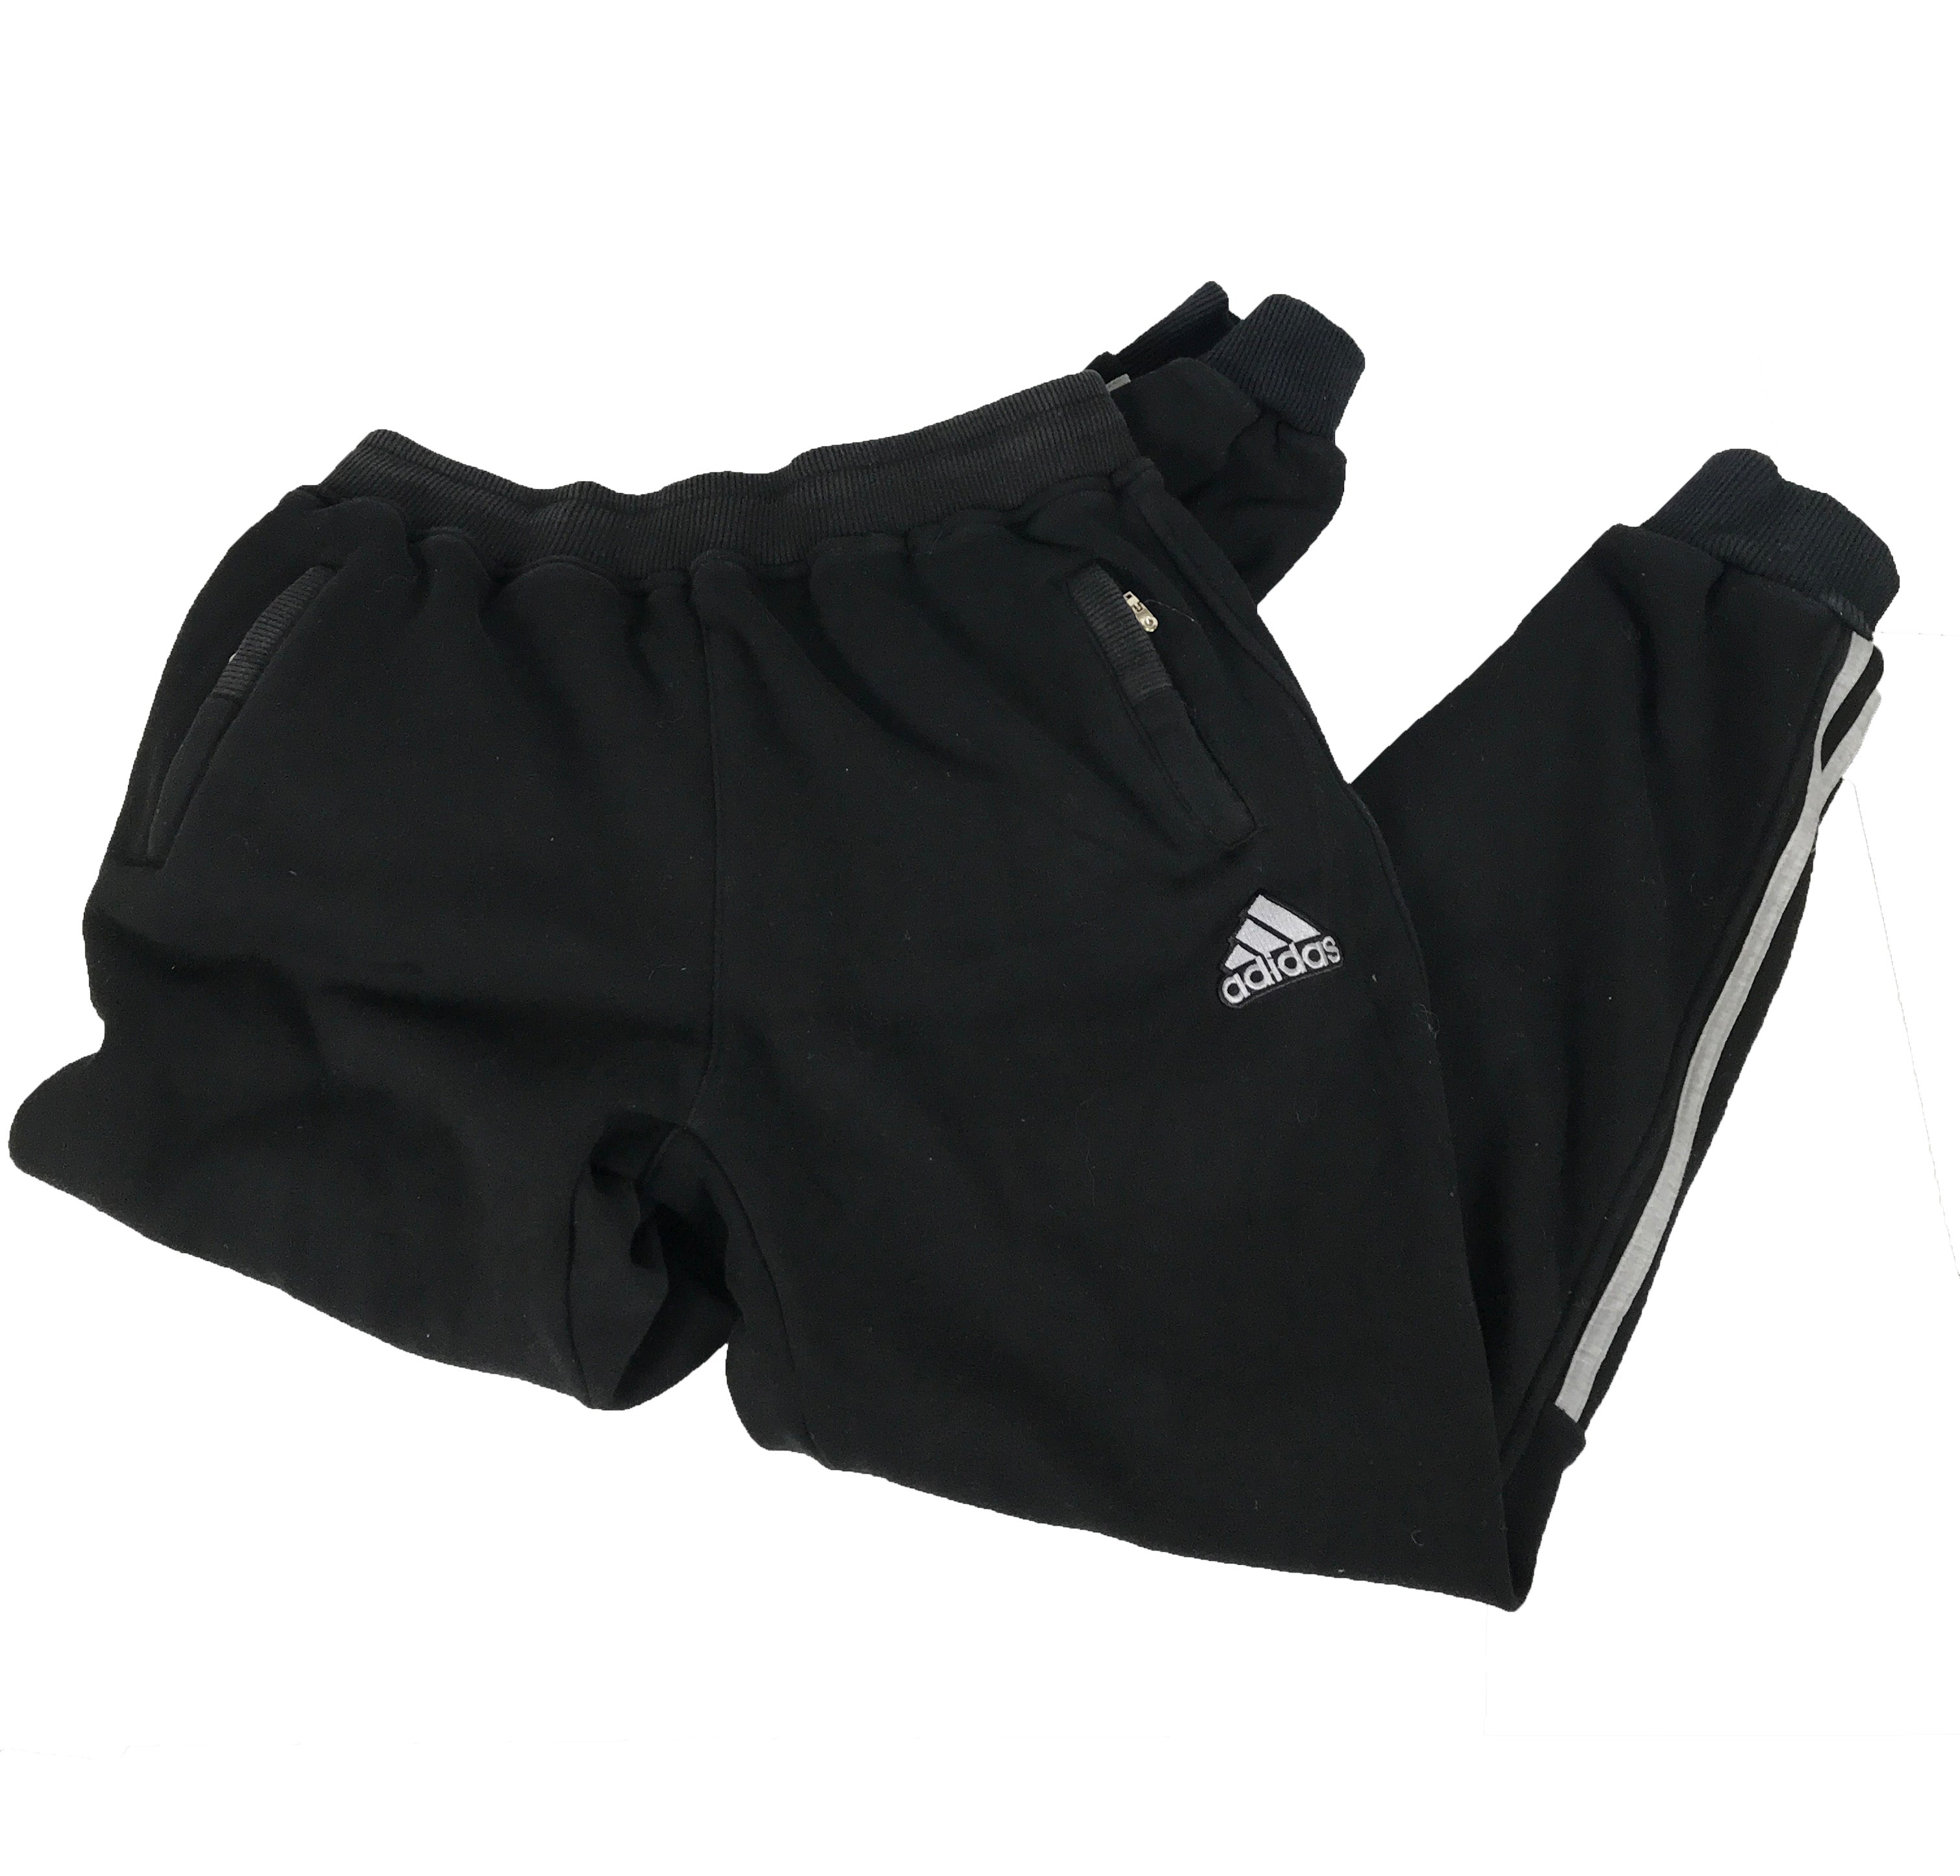 Adidas Black Sweatpants Women's Size 2XL